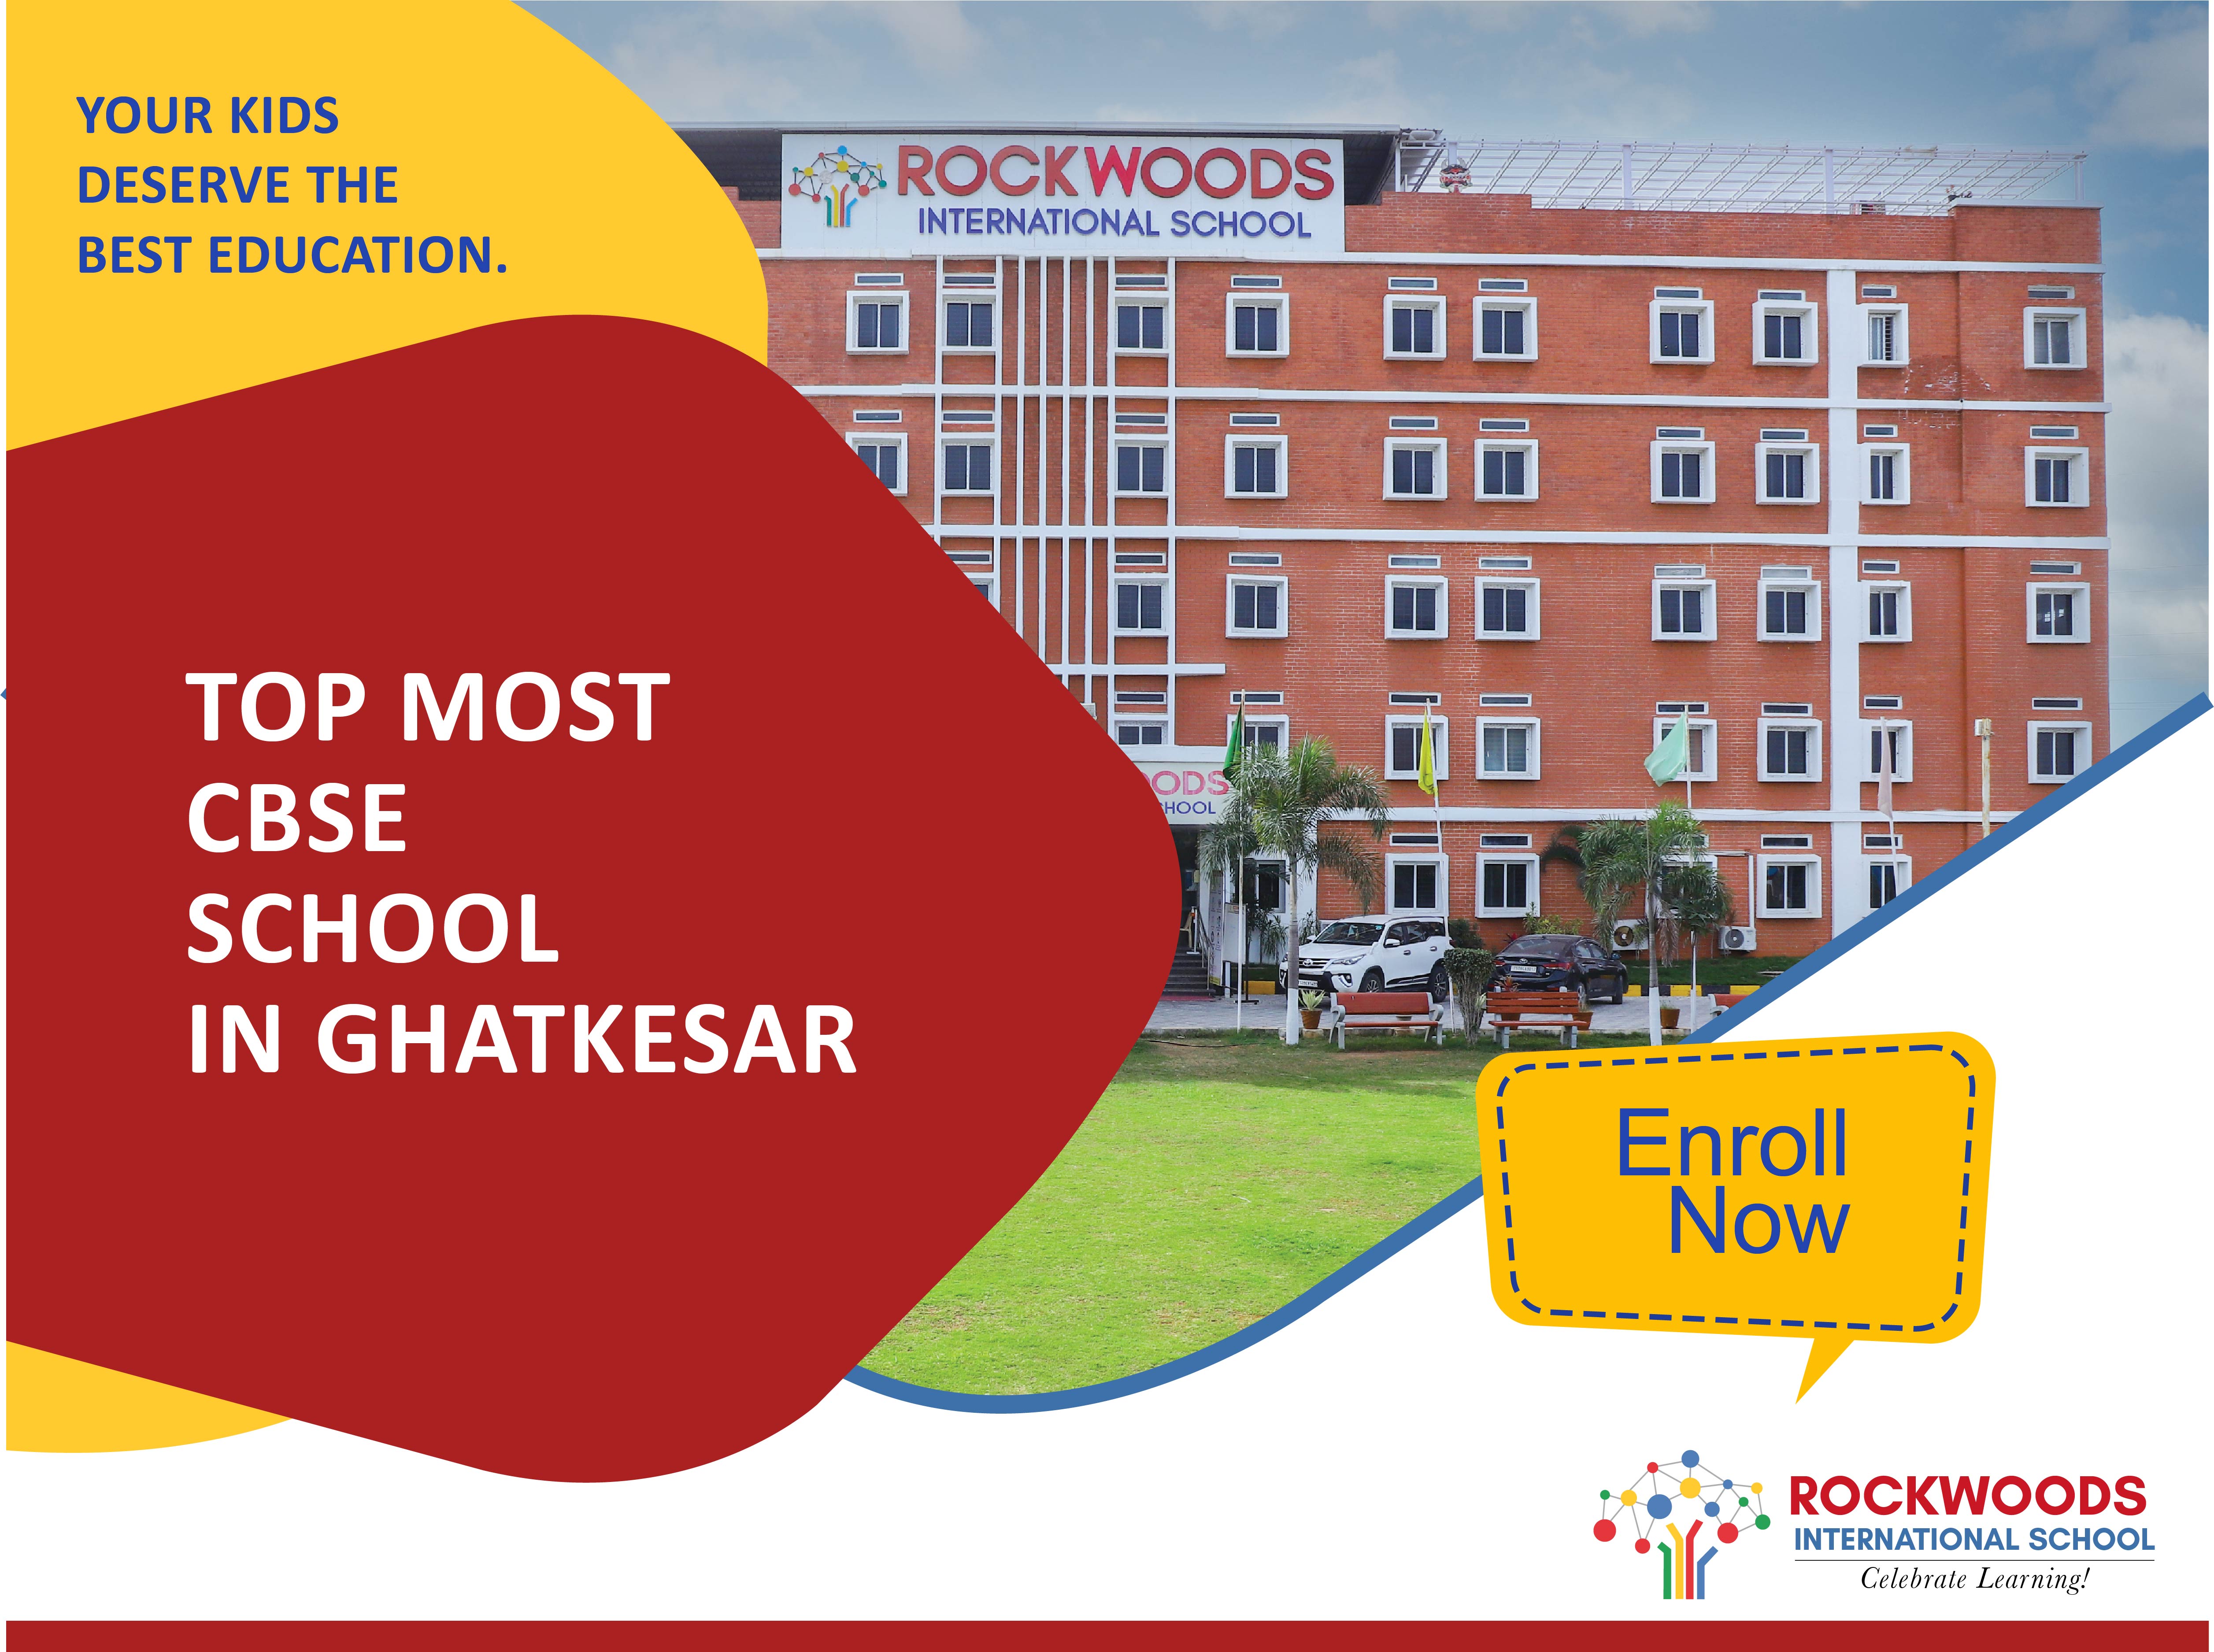 Which is the top most cbse school in Ghatkesar?